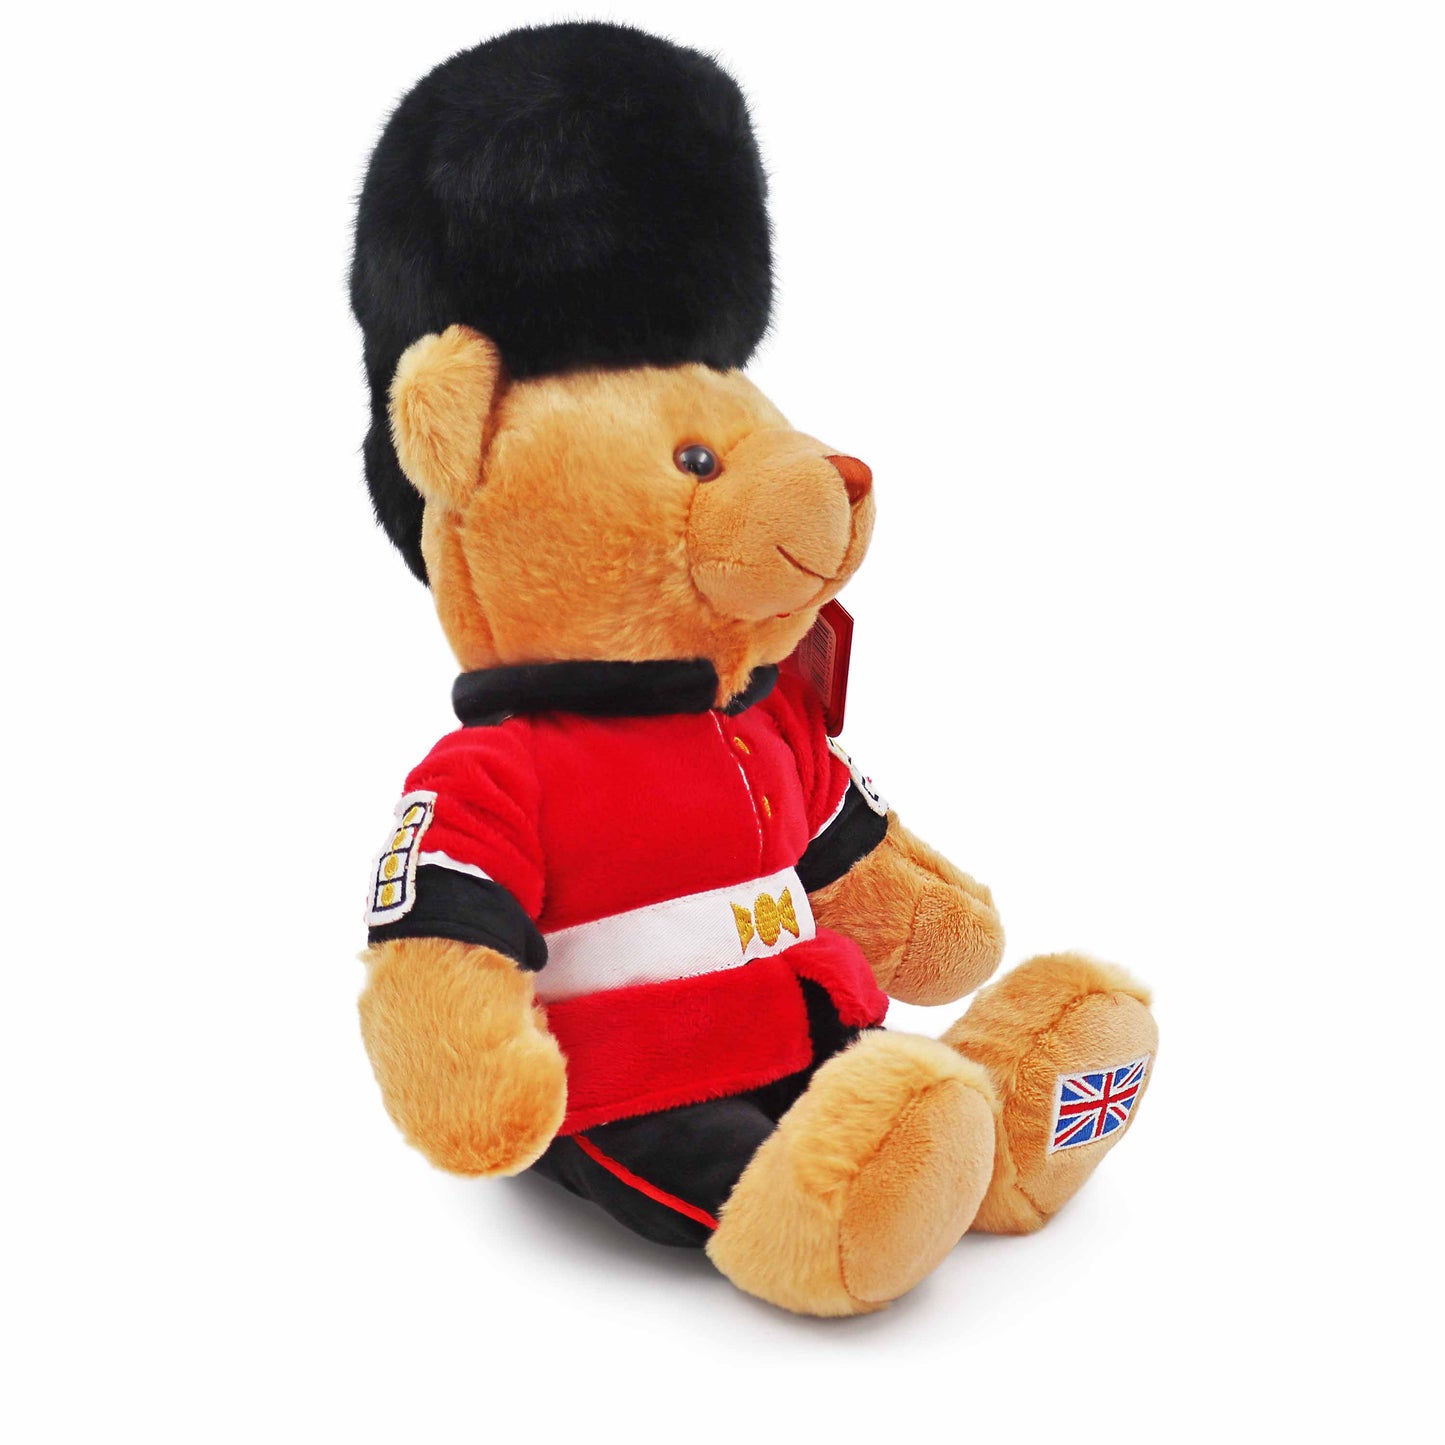 King Guardsman Teddy Bear - 25cm (Large) - British Souvenirs Teddy Bears